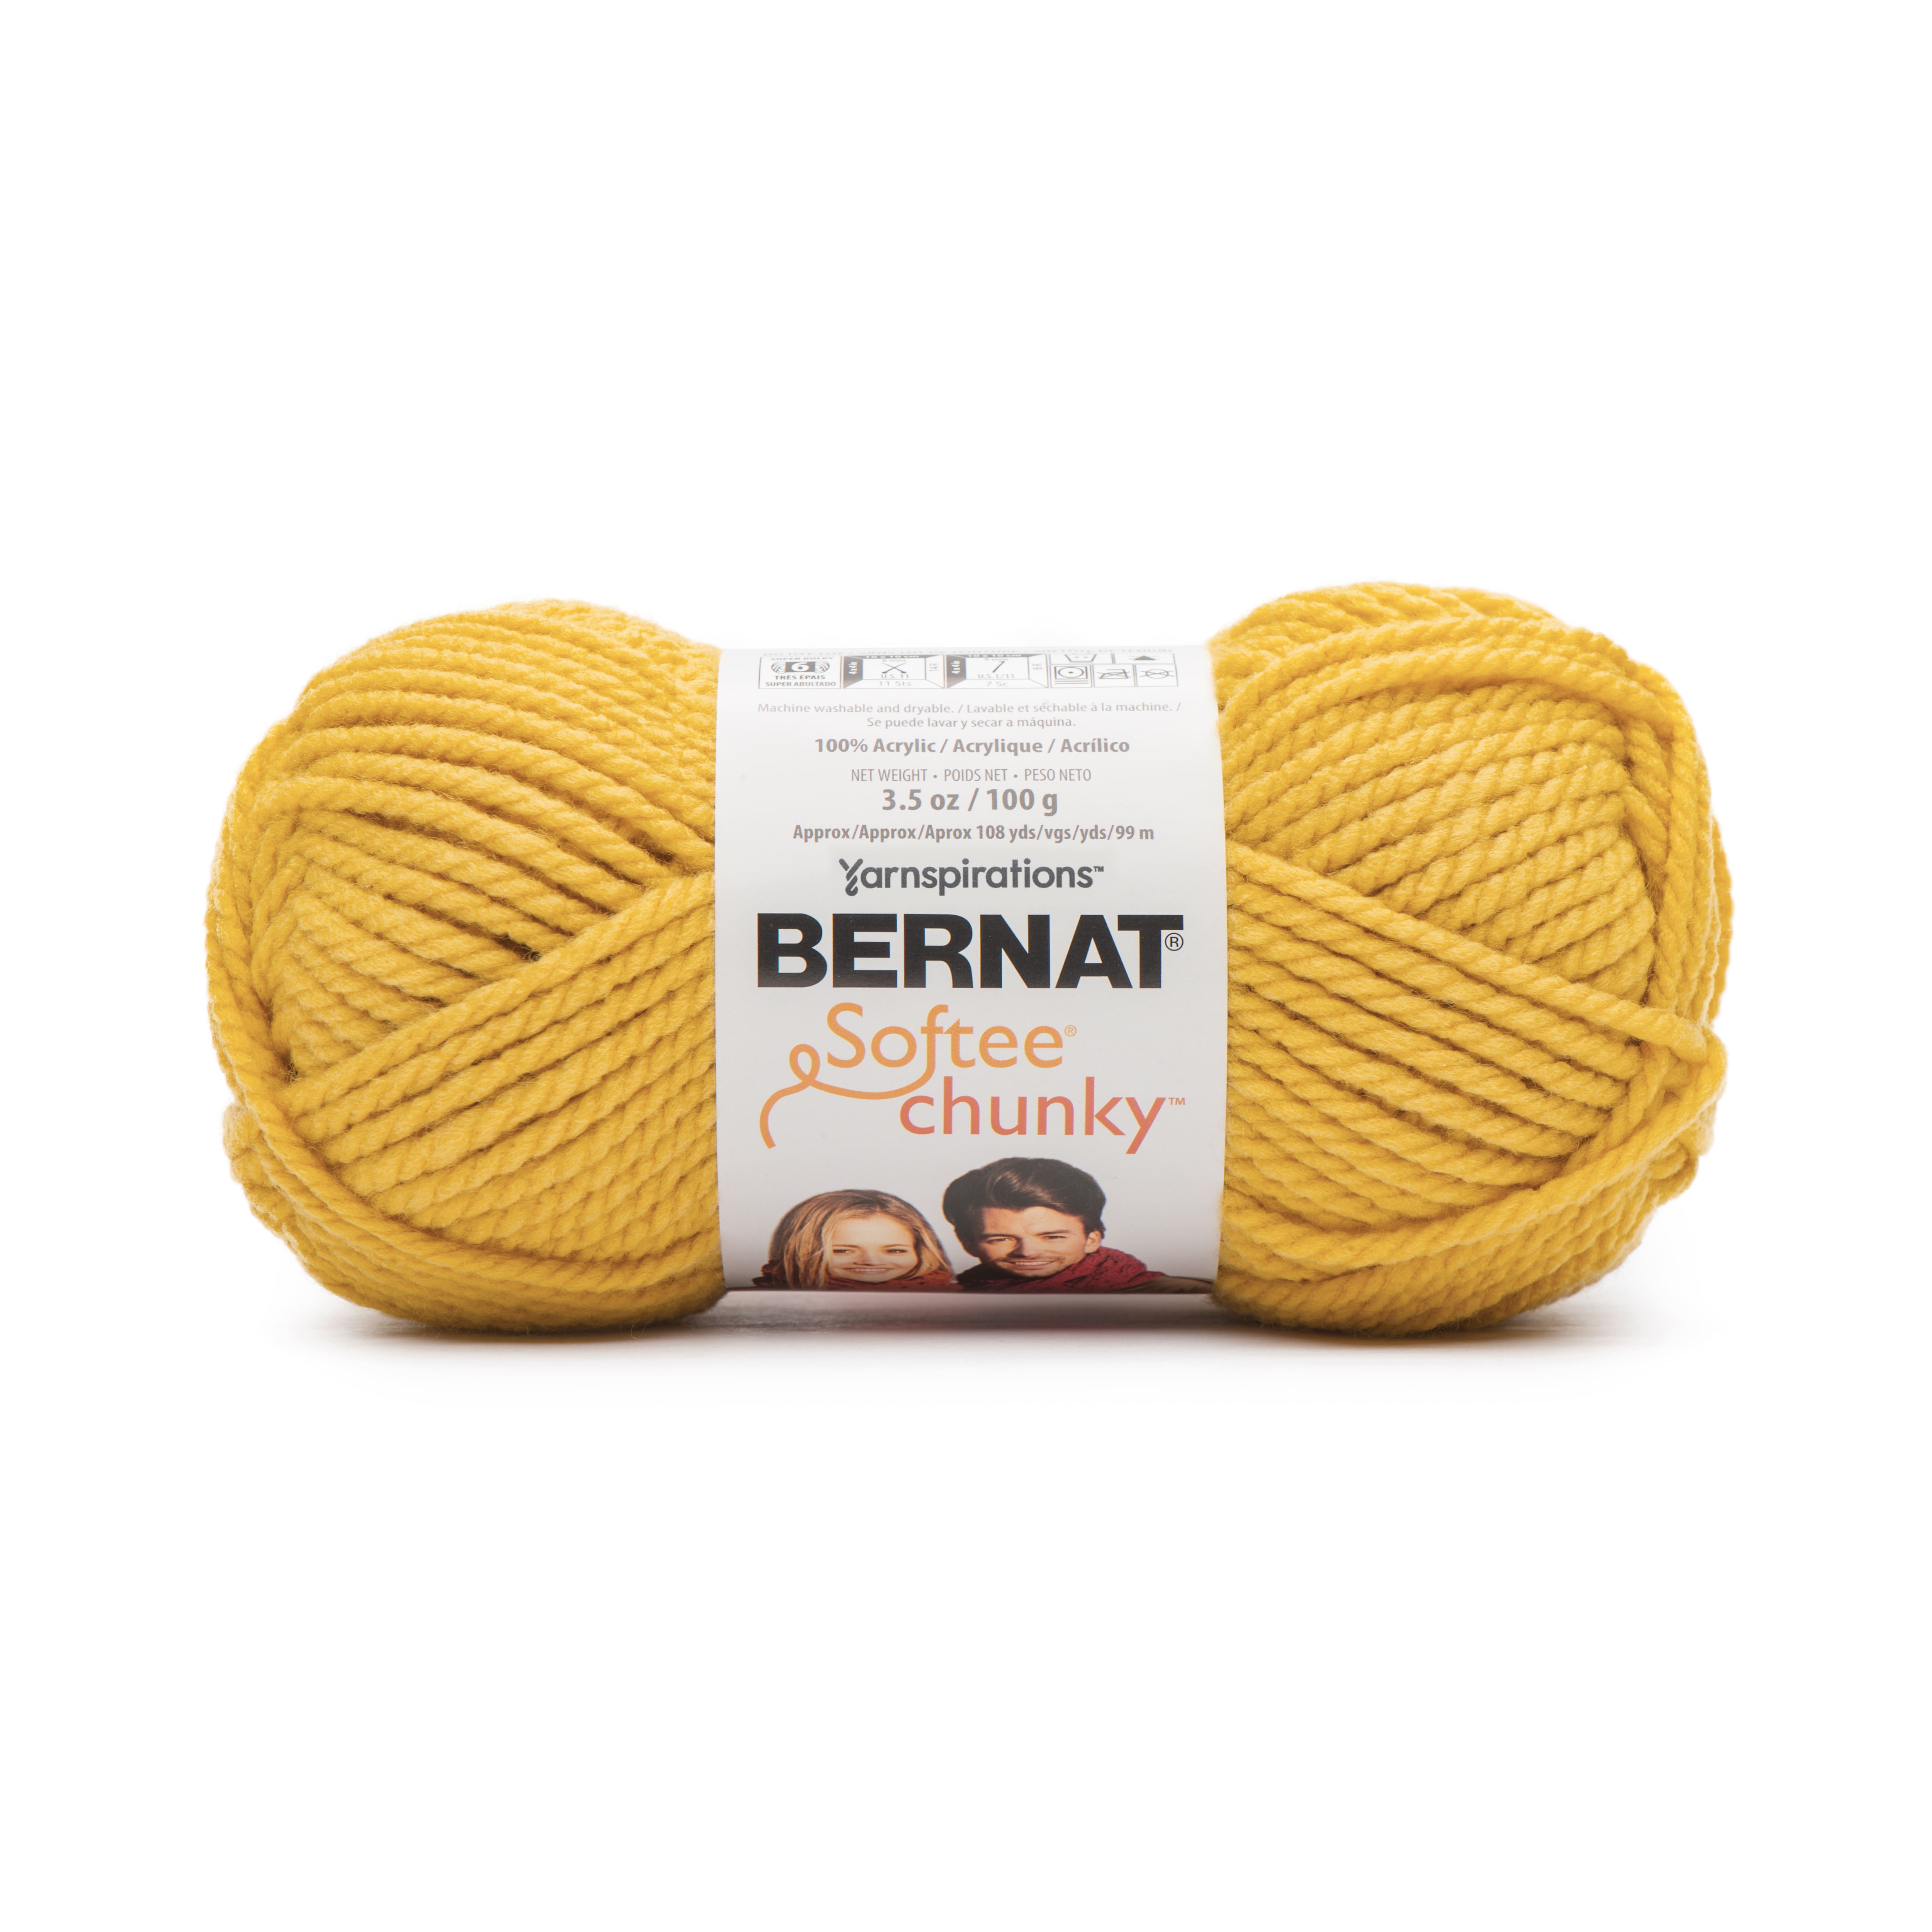 New Bernat softee chunky light tan yarn. 3.5 oz/skein.